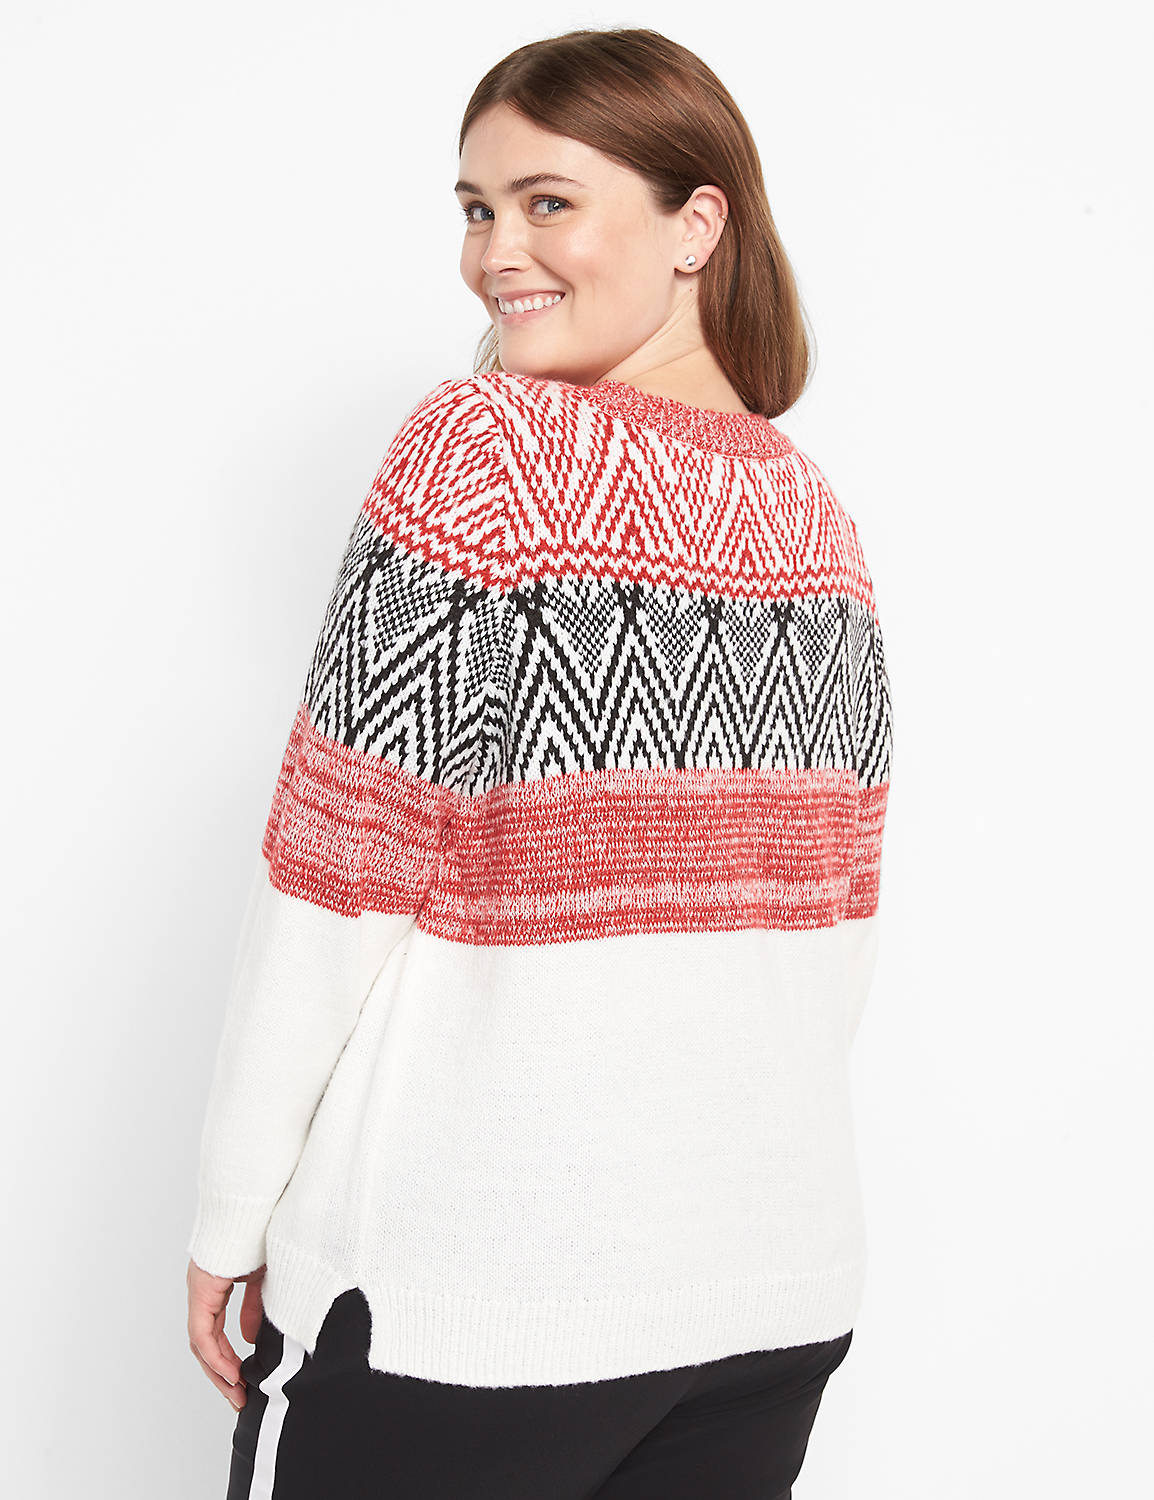 Crew-Neck Jacquard Sweater Product Image 2